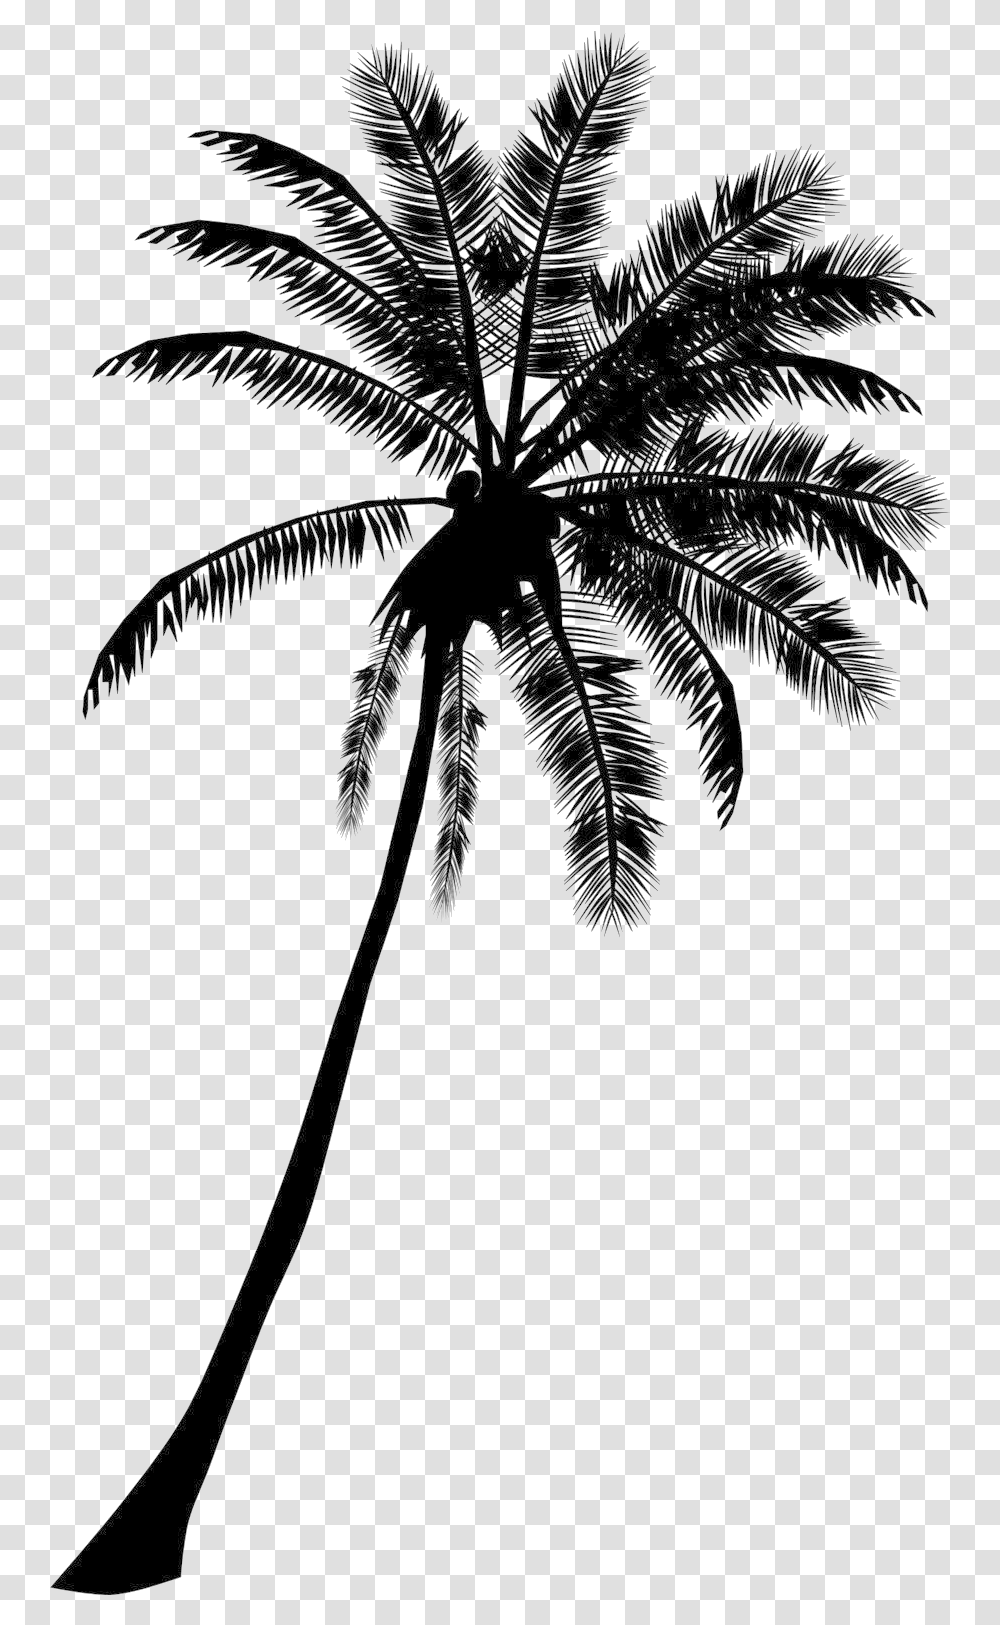 Beach Coconut Tree Images All Coconut Tree Silhouette, Plant, Palm Tree, Arecaceae, Annonaceae Transparent Png